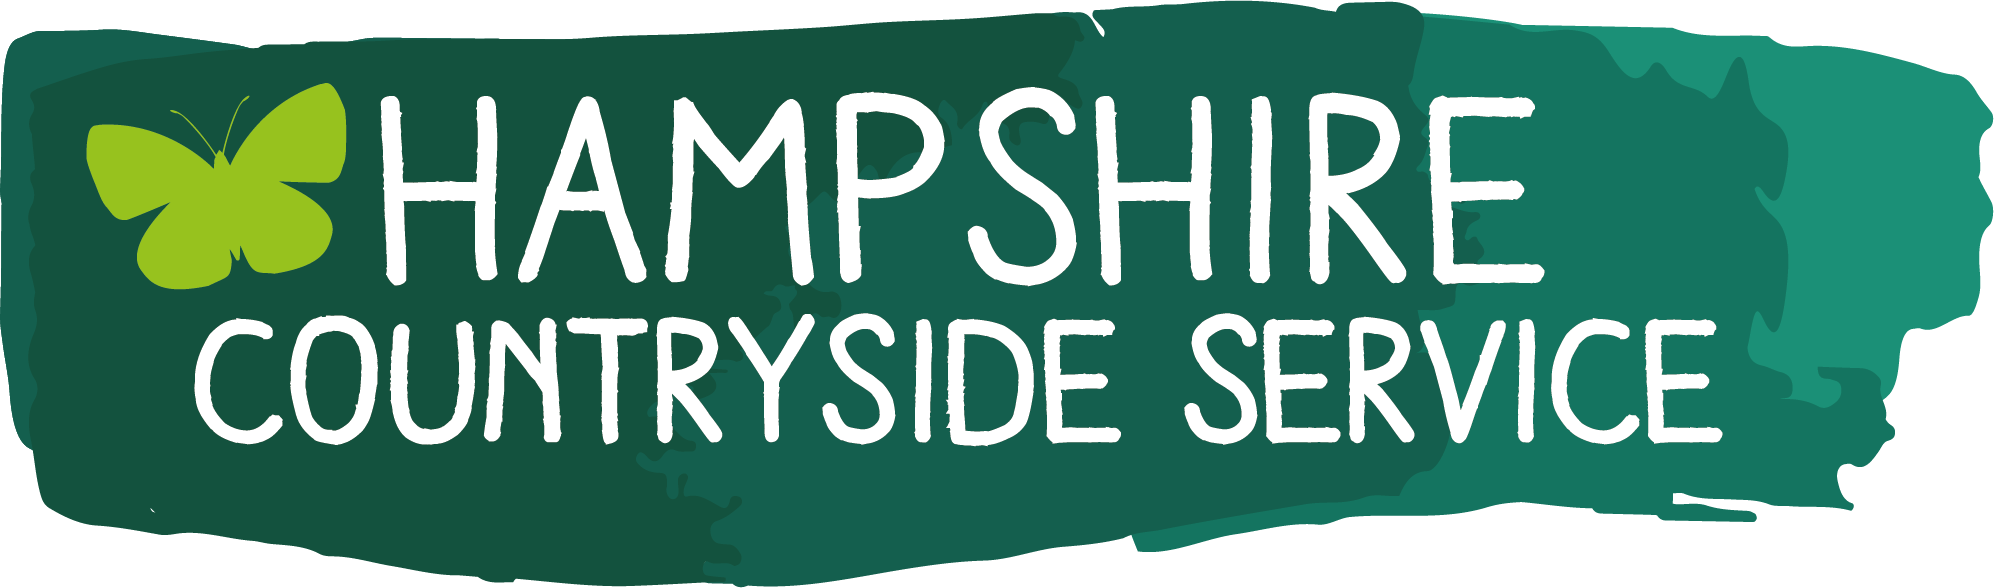 Hampshire Countryside Service logo